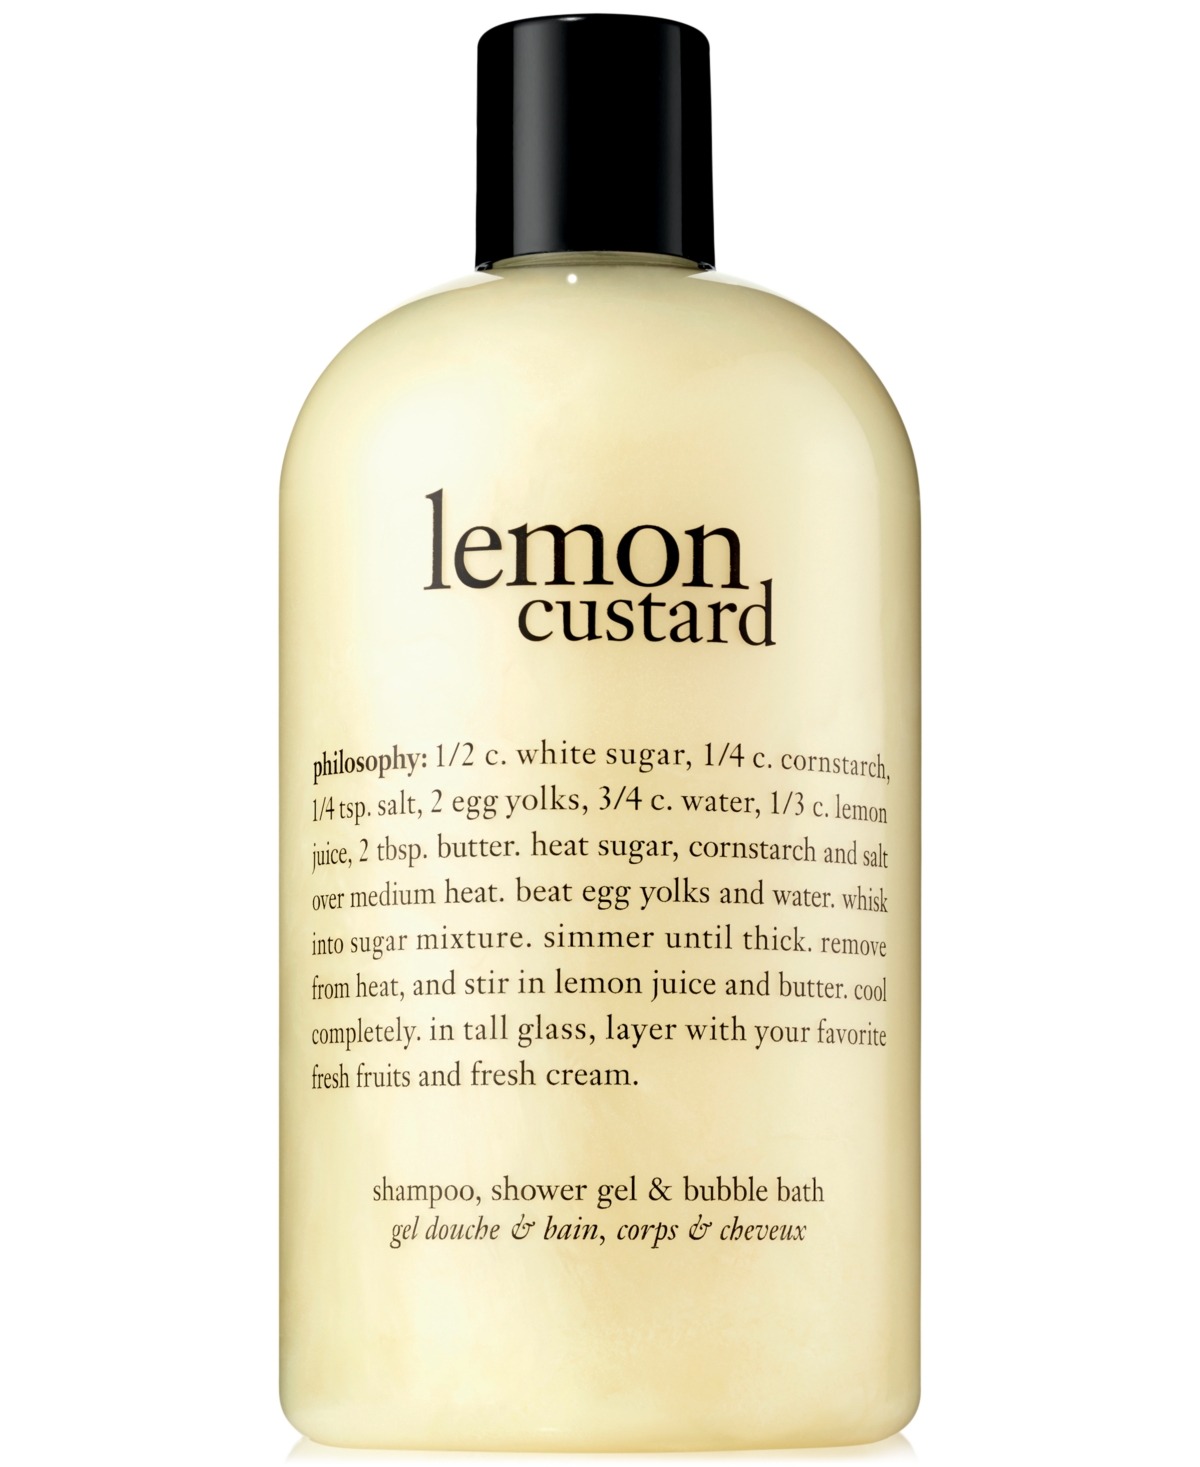 lemon custard 3-in-1 shampoo, shower gel and bubble bath, 16 oz